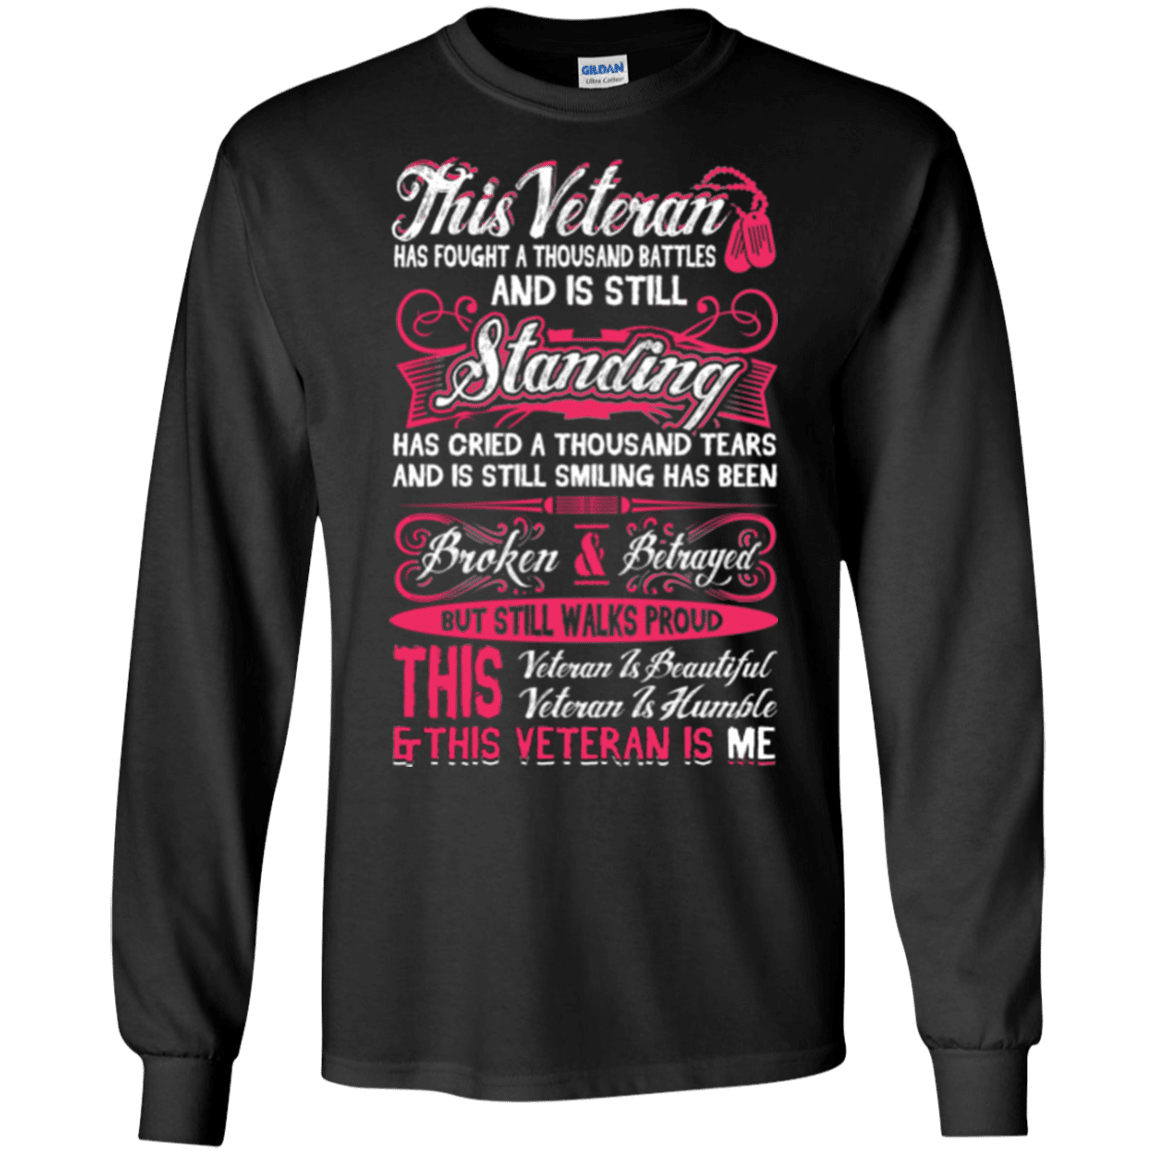 Military T-Shirt "This Veteran is Beautiful and Humble"-TShirt-General-Veterans Nation